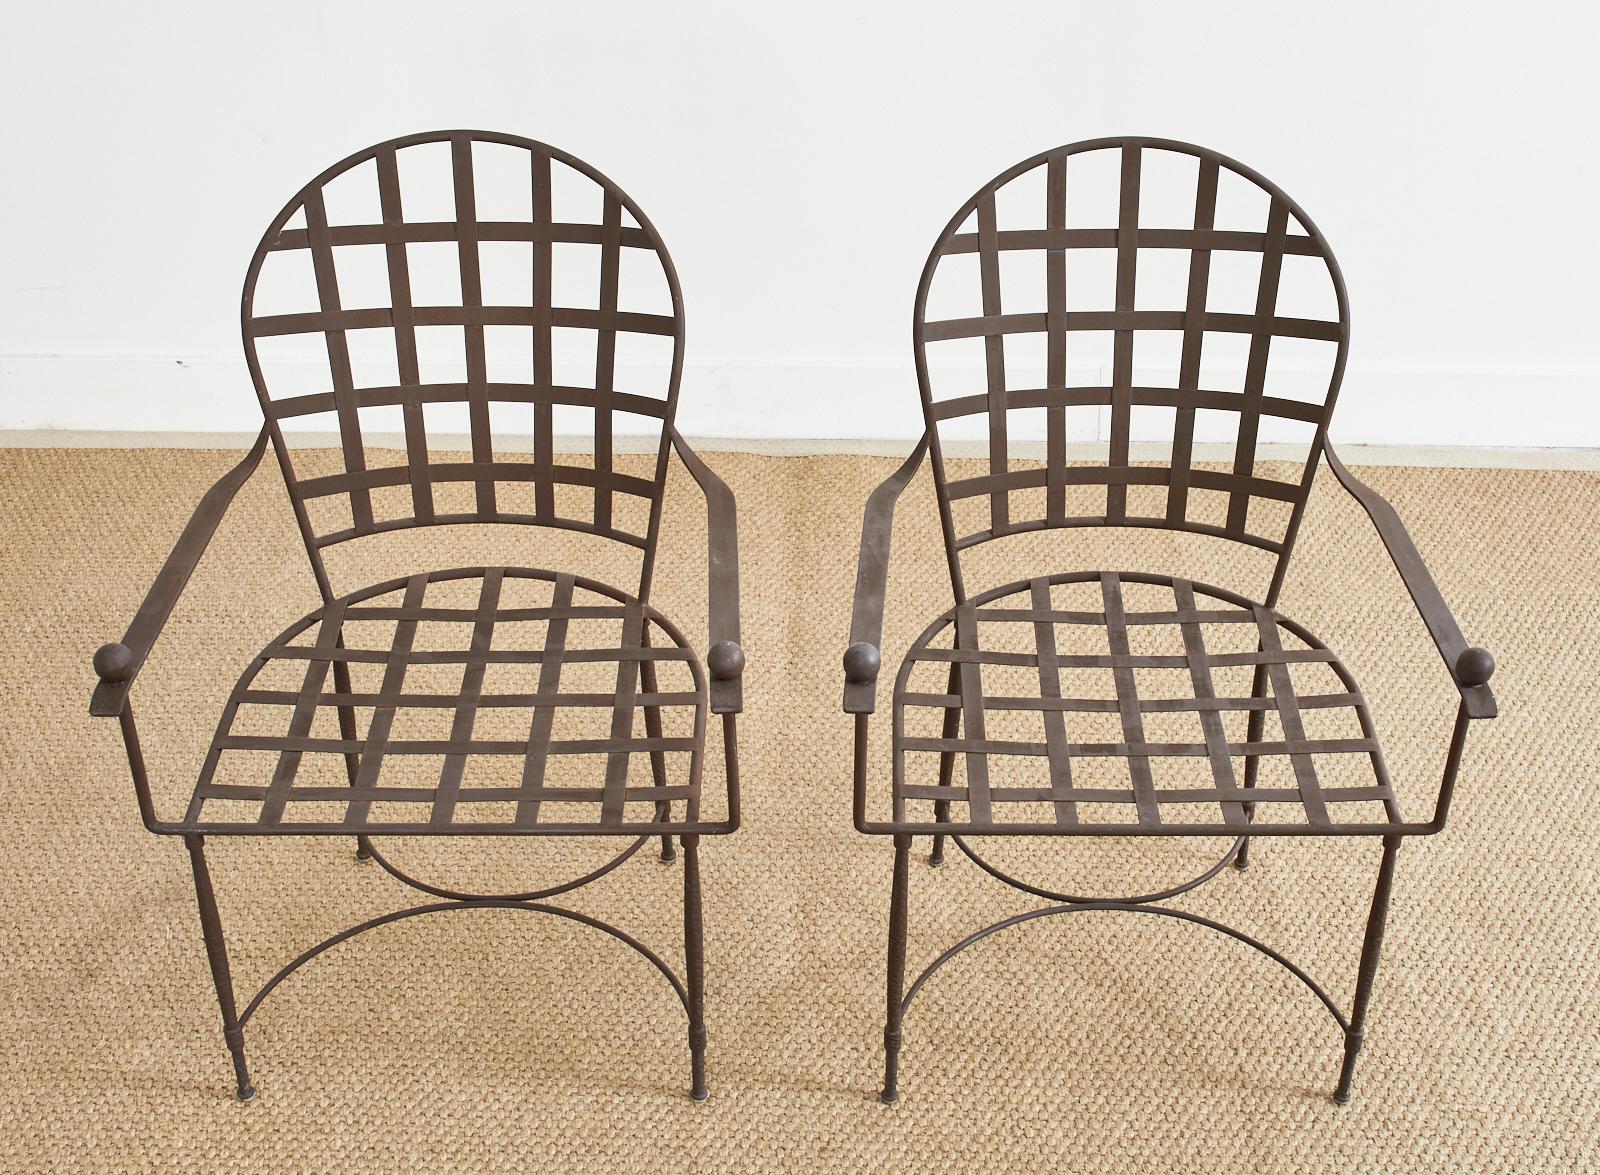 20th Century Set of Six Mario Papperzini for John Salterini Iron Garden Chairs